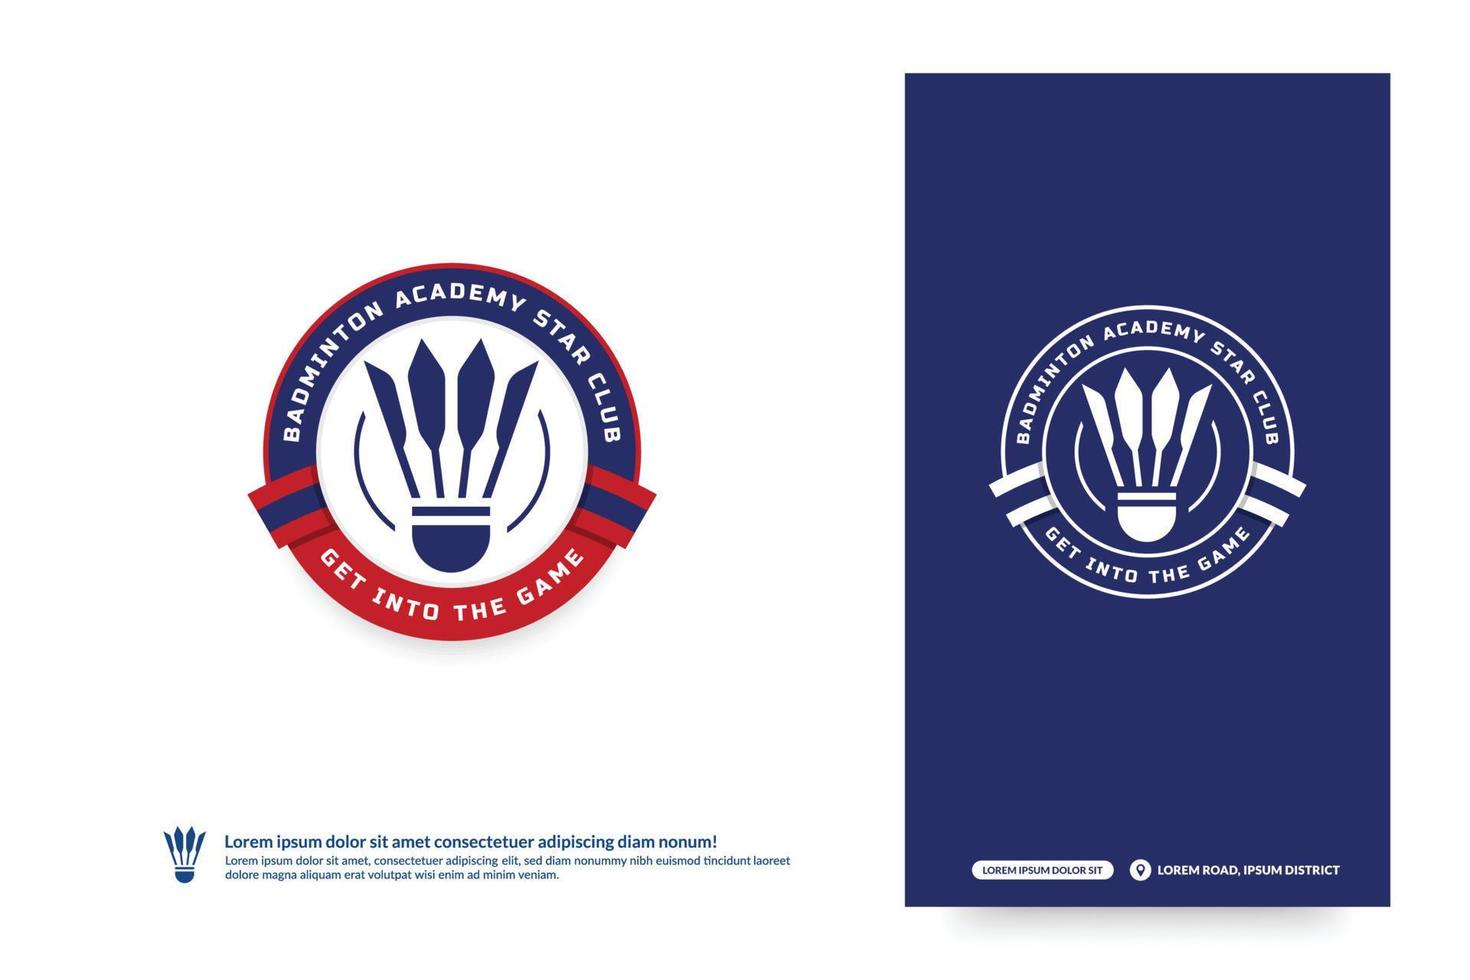 modelo de logotipo do clube de badminton, conceito de logotipo de torneios de badminton. identidade da equipe do clube isolada no fundo branco, ilustração vetorial de design de símbolo esportivo abstrato vetor